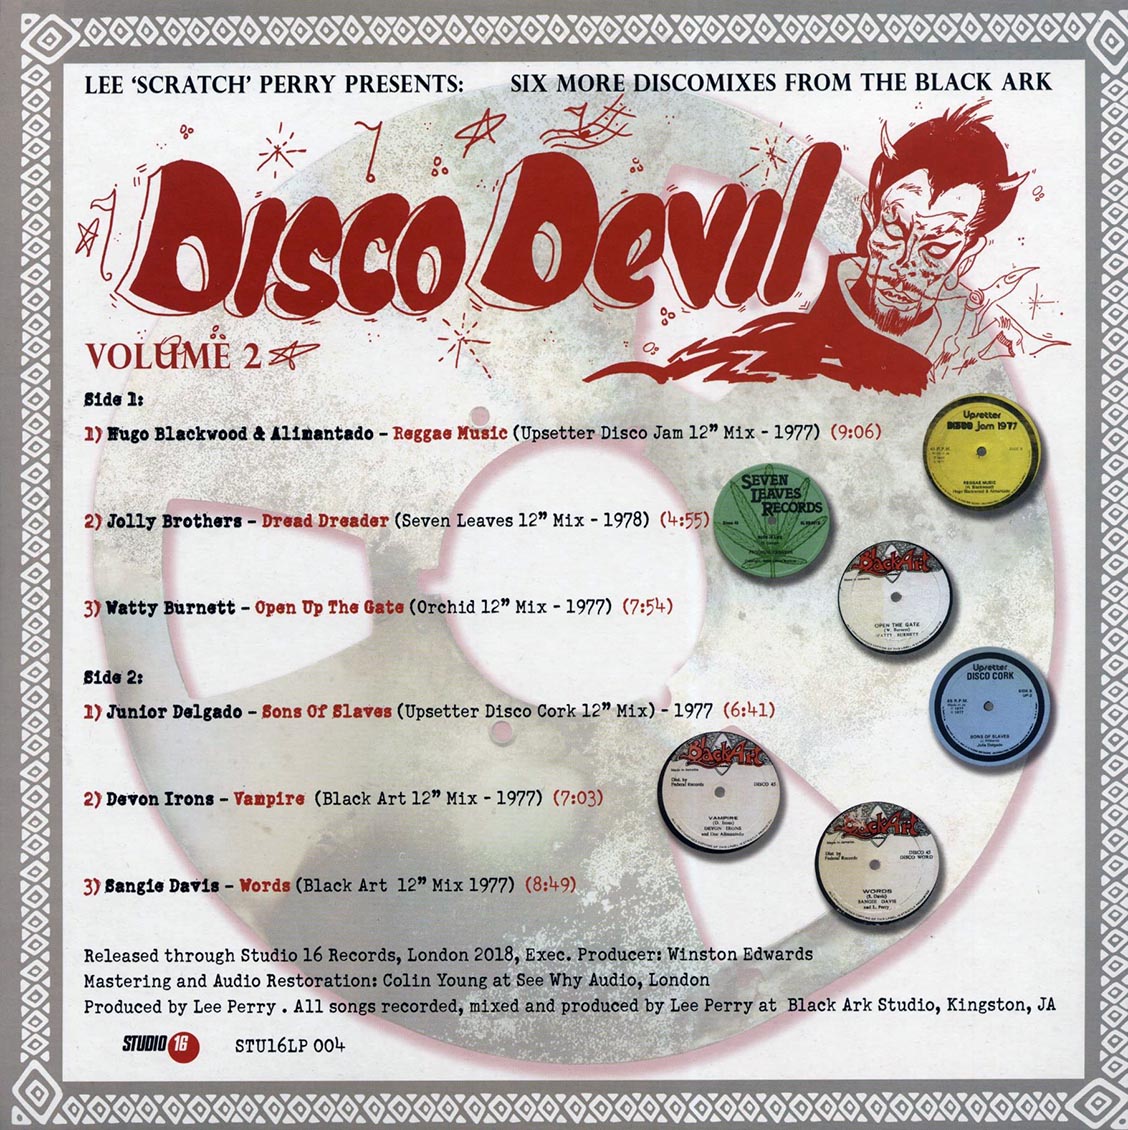 Lee Perry, Watty Burnett, Sangie Davis, Etc. - Disco Devil Volume 2: 6 More Classic Discomixes From The Black Ark Studio 1977-78